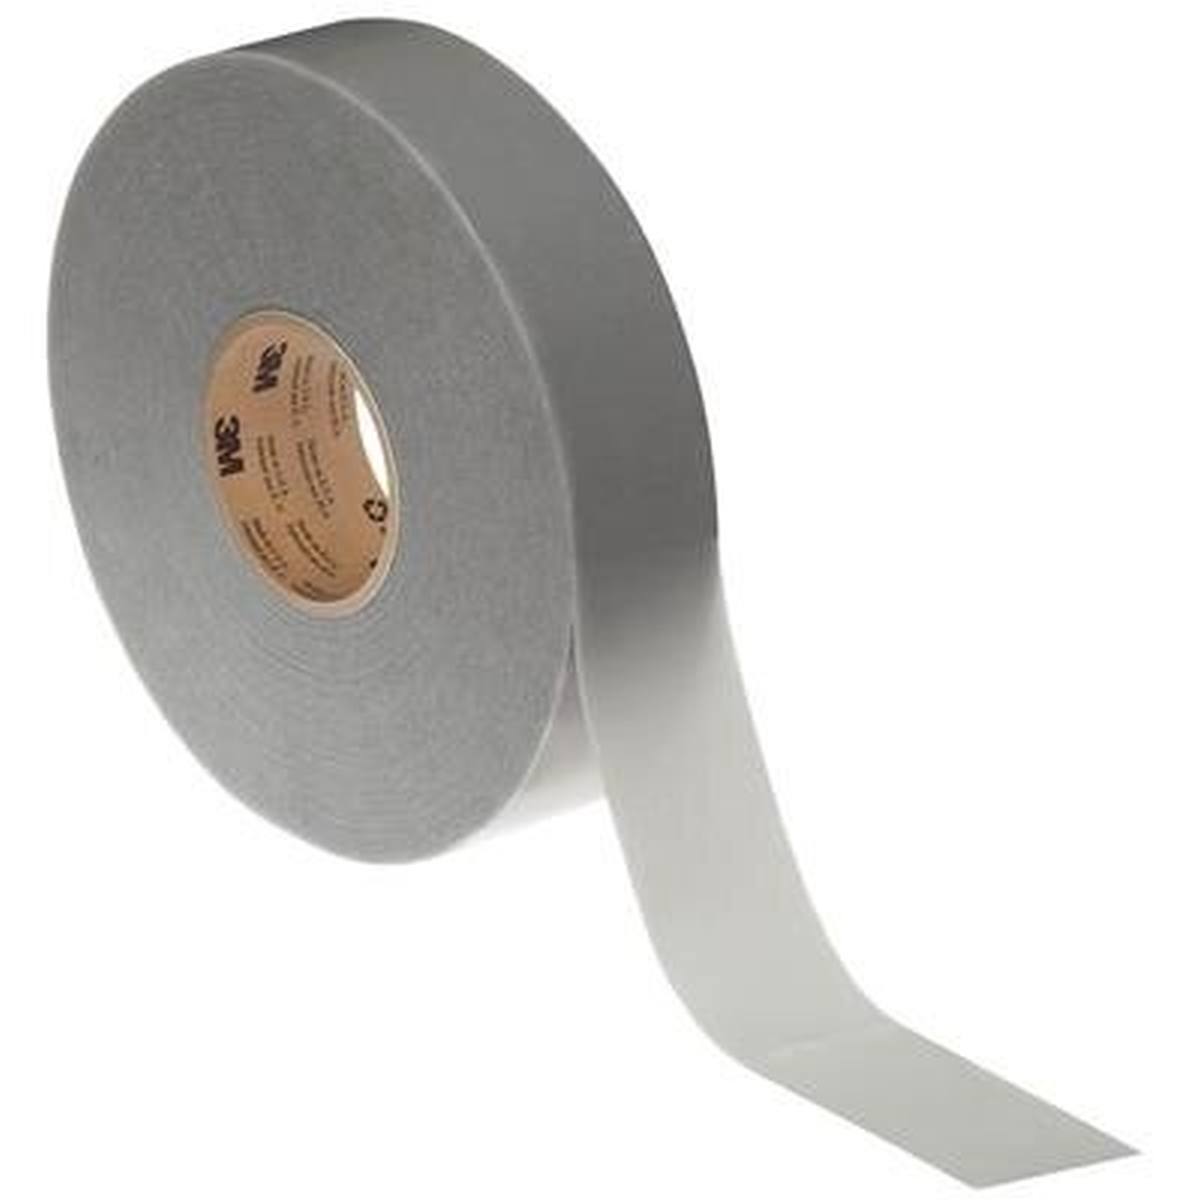 3M high-performance sealing tape 4411G, 50 mm x 16.5 m, 1 mm, gray